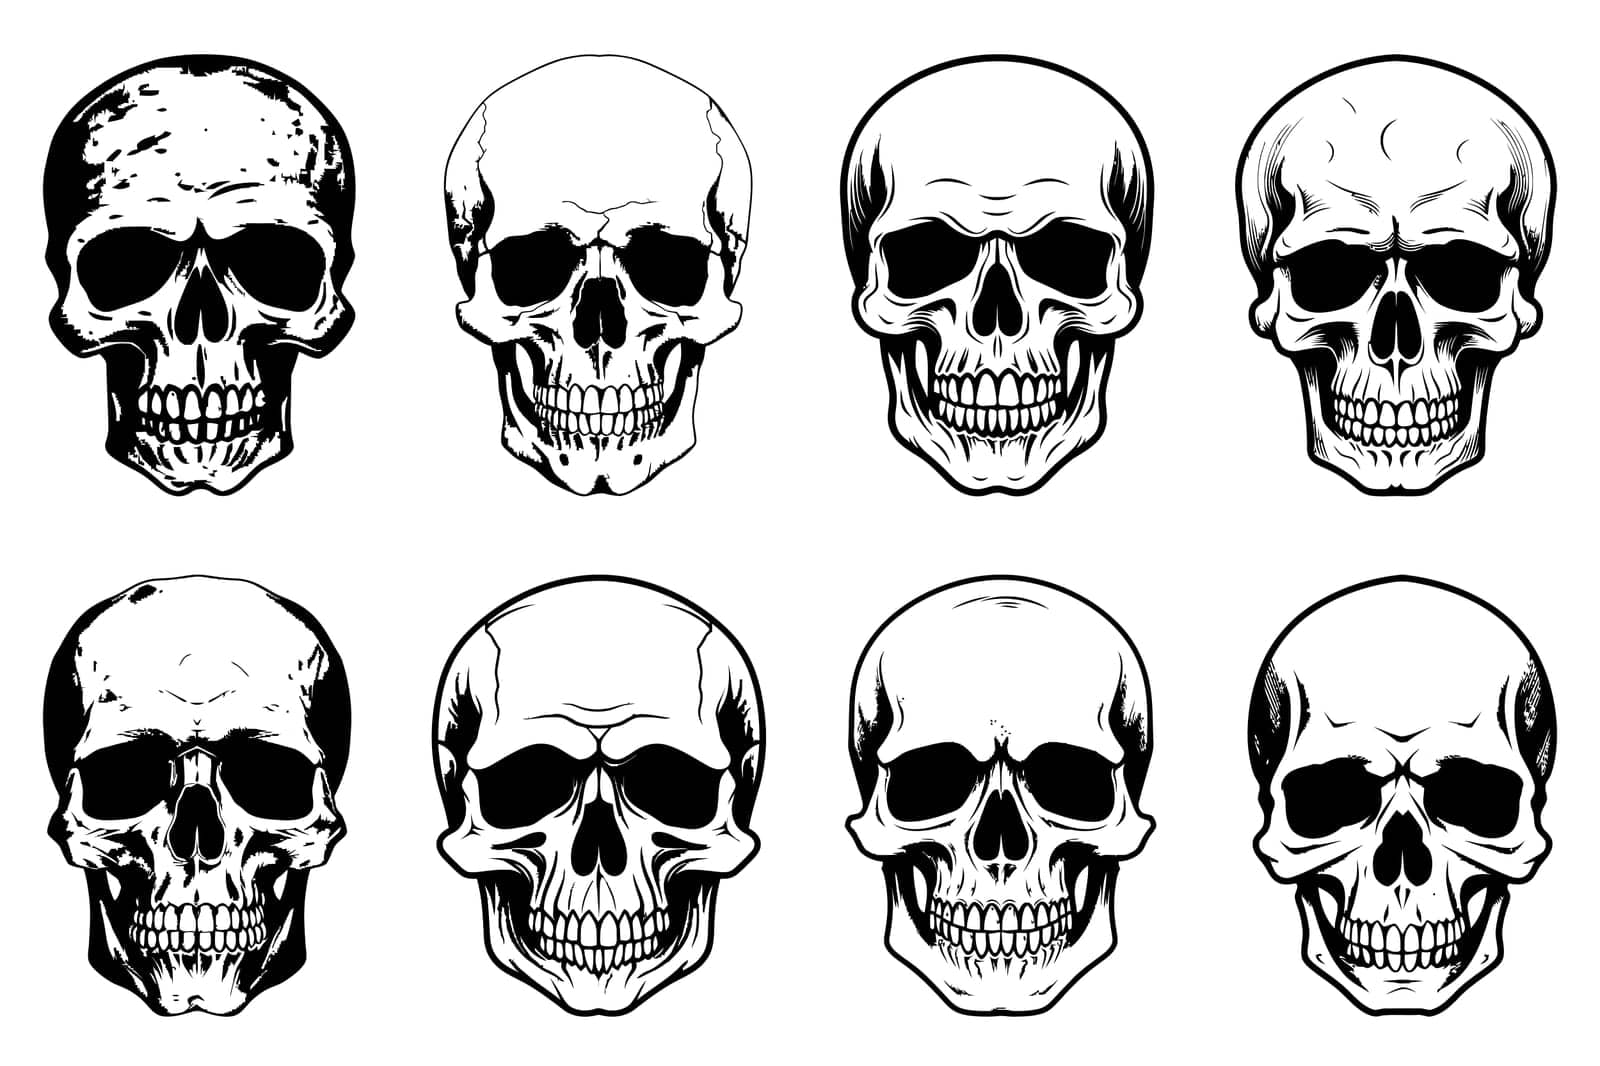 Human skulls set. Skull silhouettes. Skull icons set. Collection of skulls by Chekman